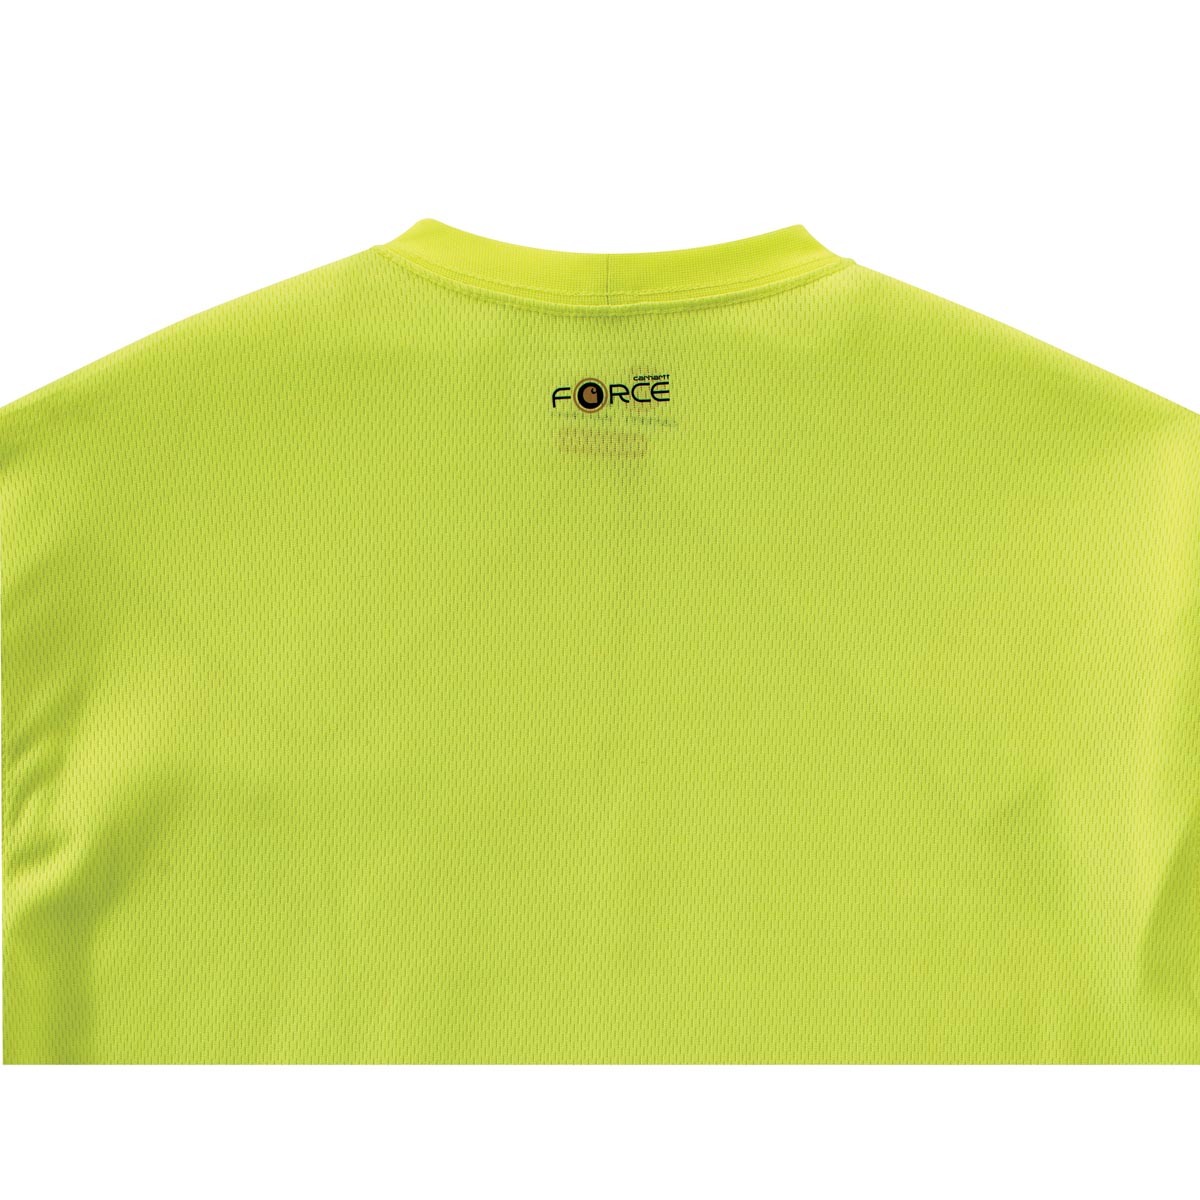 Carhartt Mens HV Force Color Enhanced Graphic Long Sleeve T Shirt